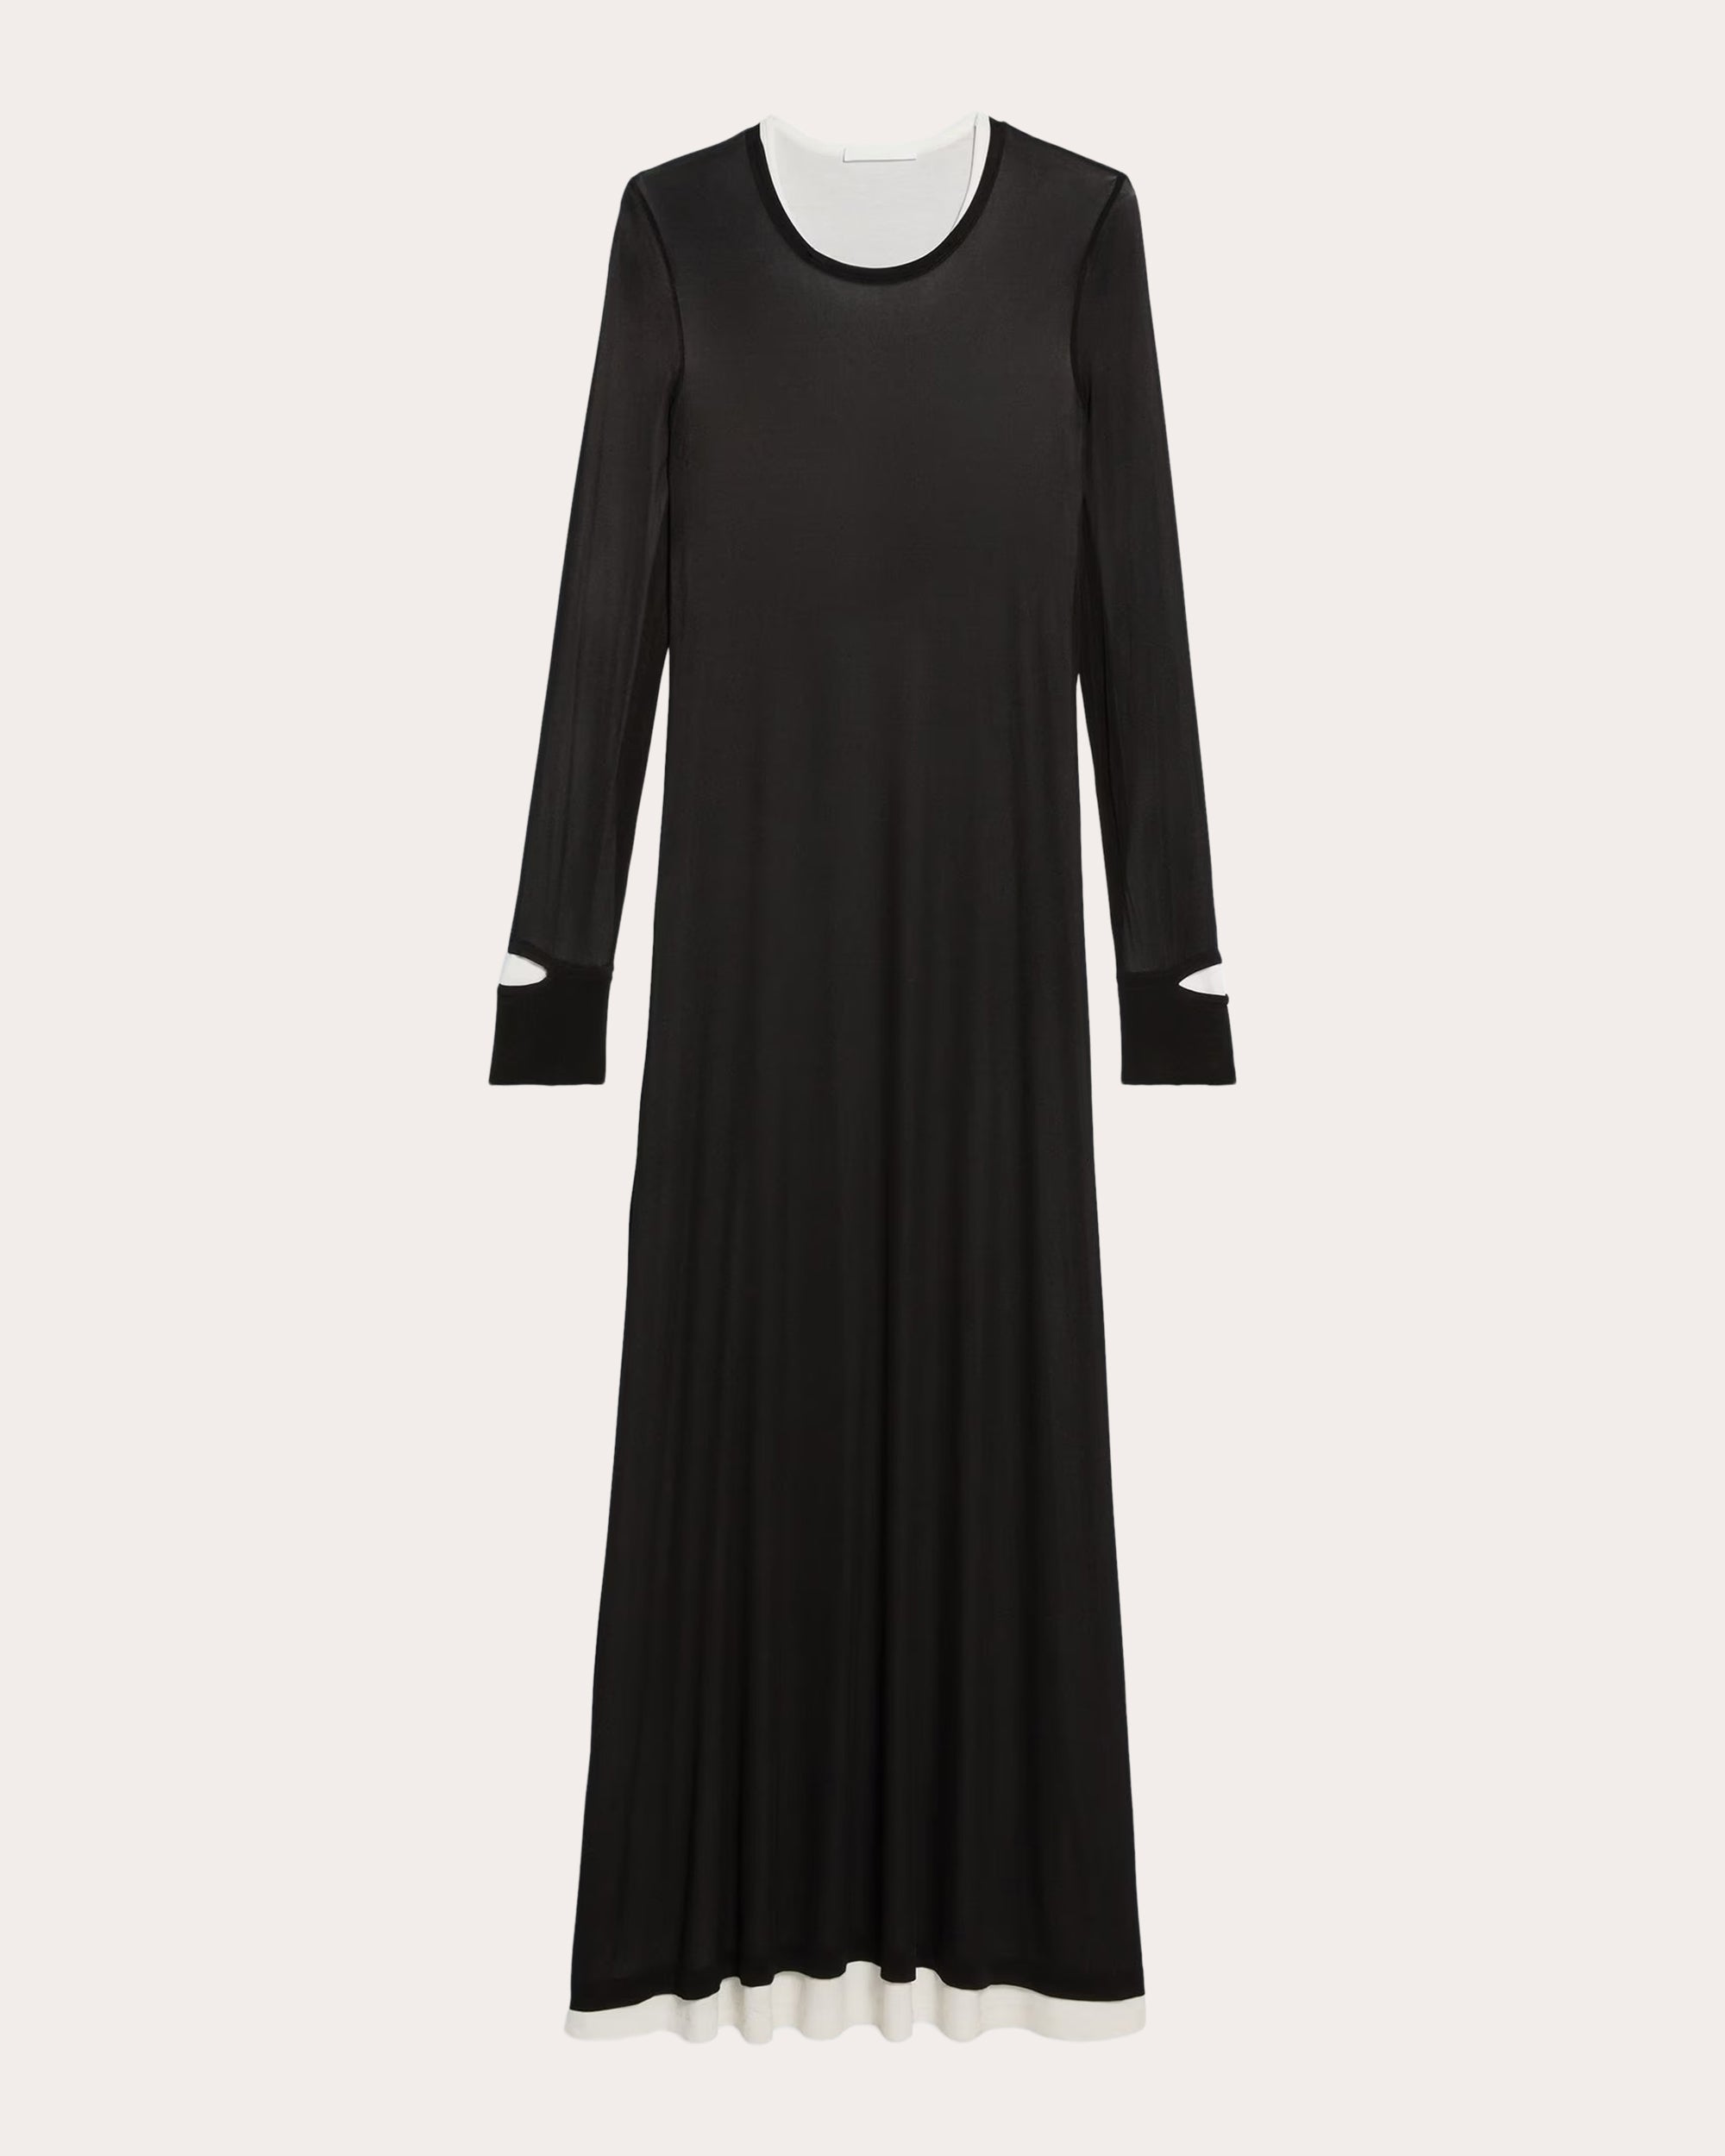 Helmut Lang Women's Double Layer Dress In Black